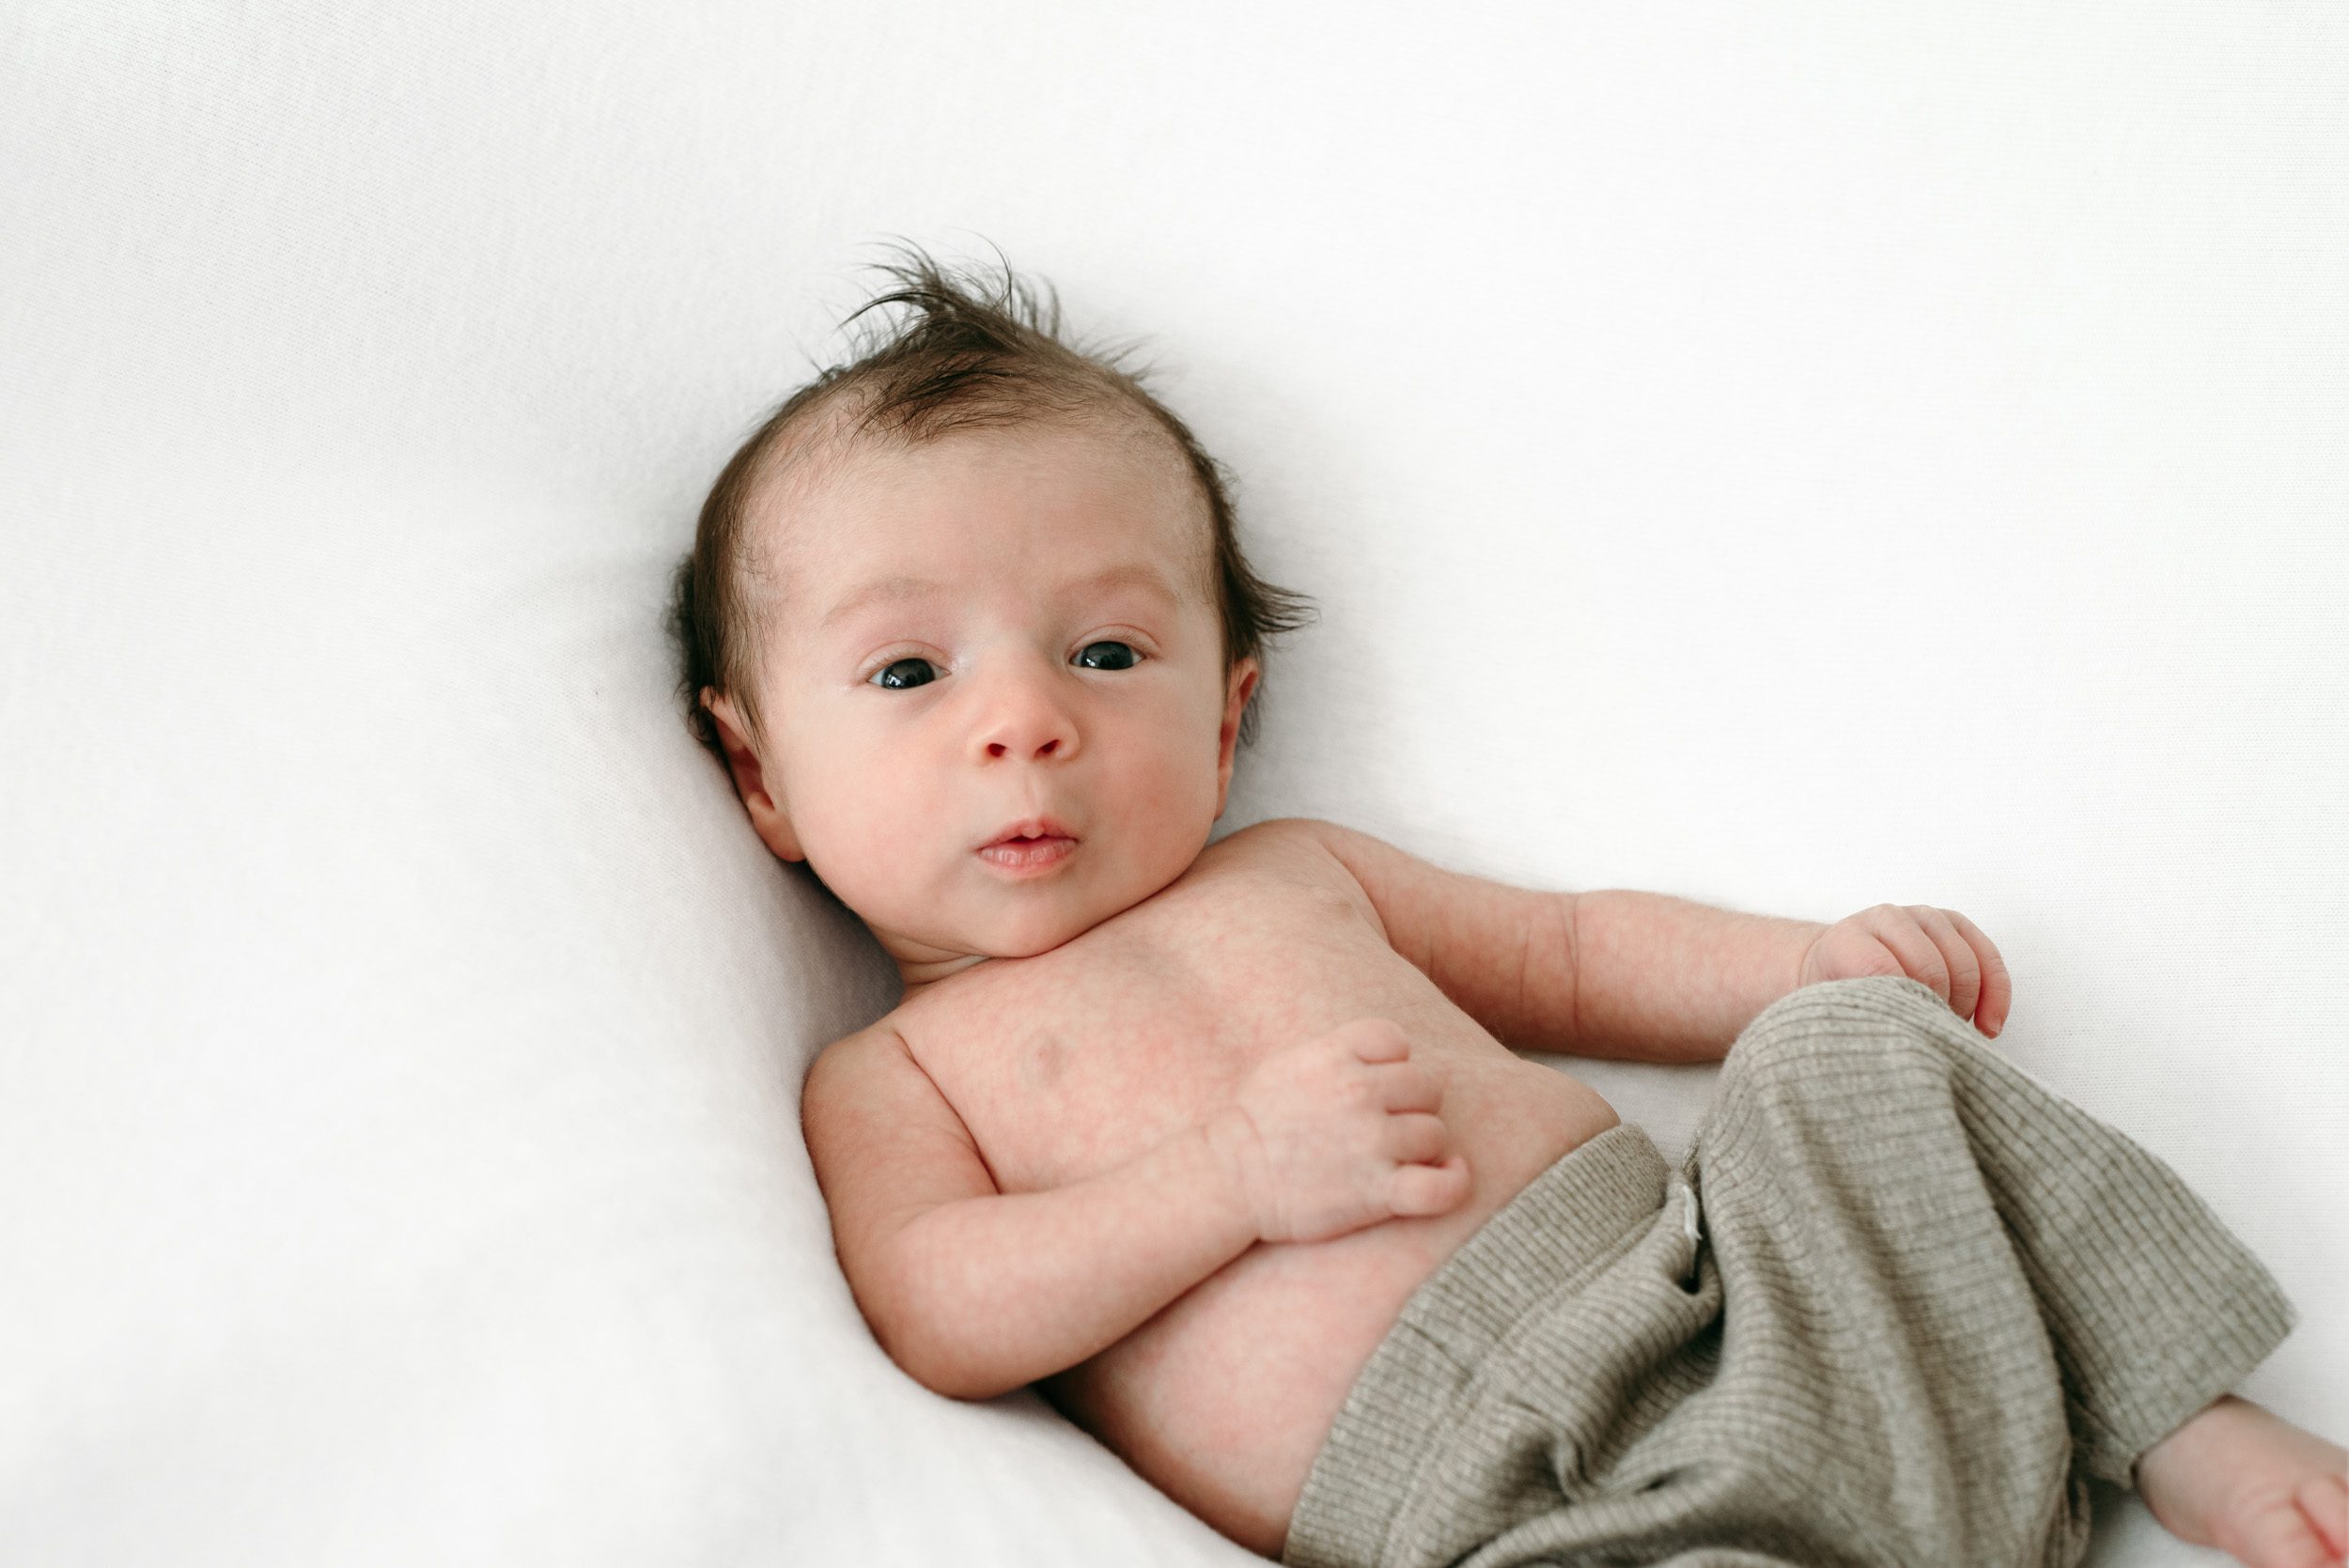 newborn baby boy laying on a white blanket during a newborn photoshoot